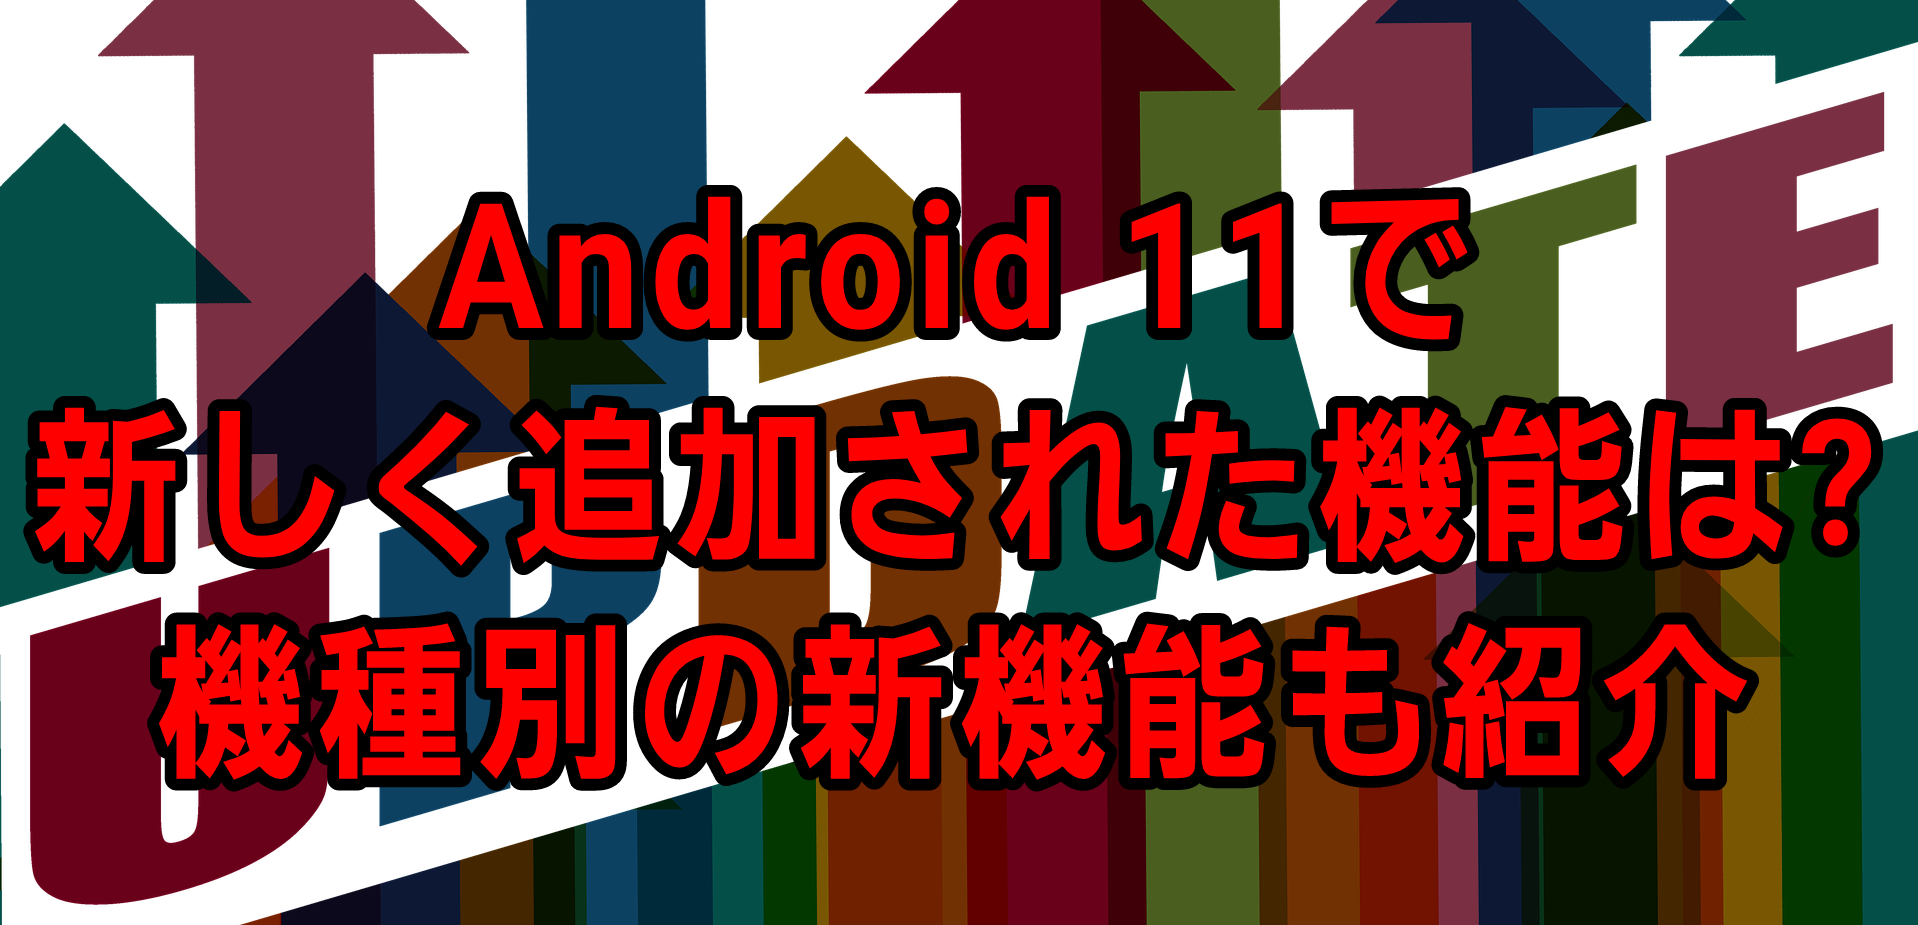 Android 11で新しく追加された機能は?機種別の新機能も紹介